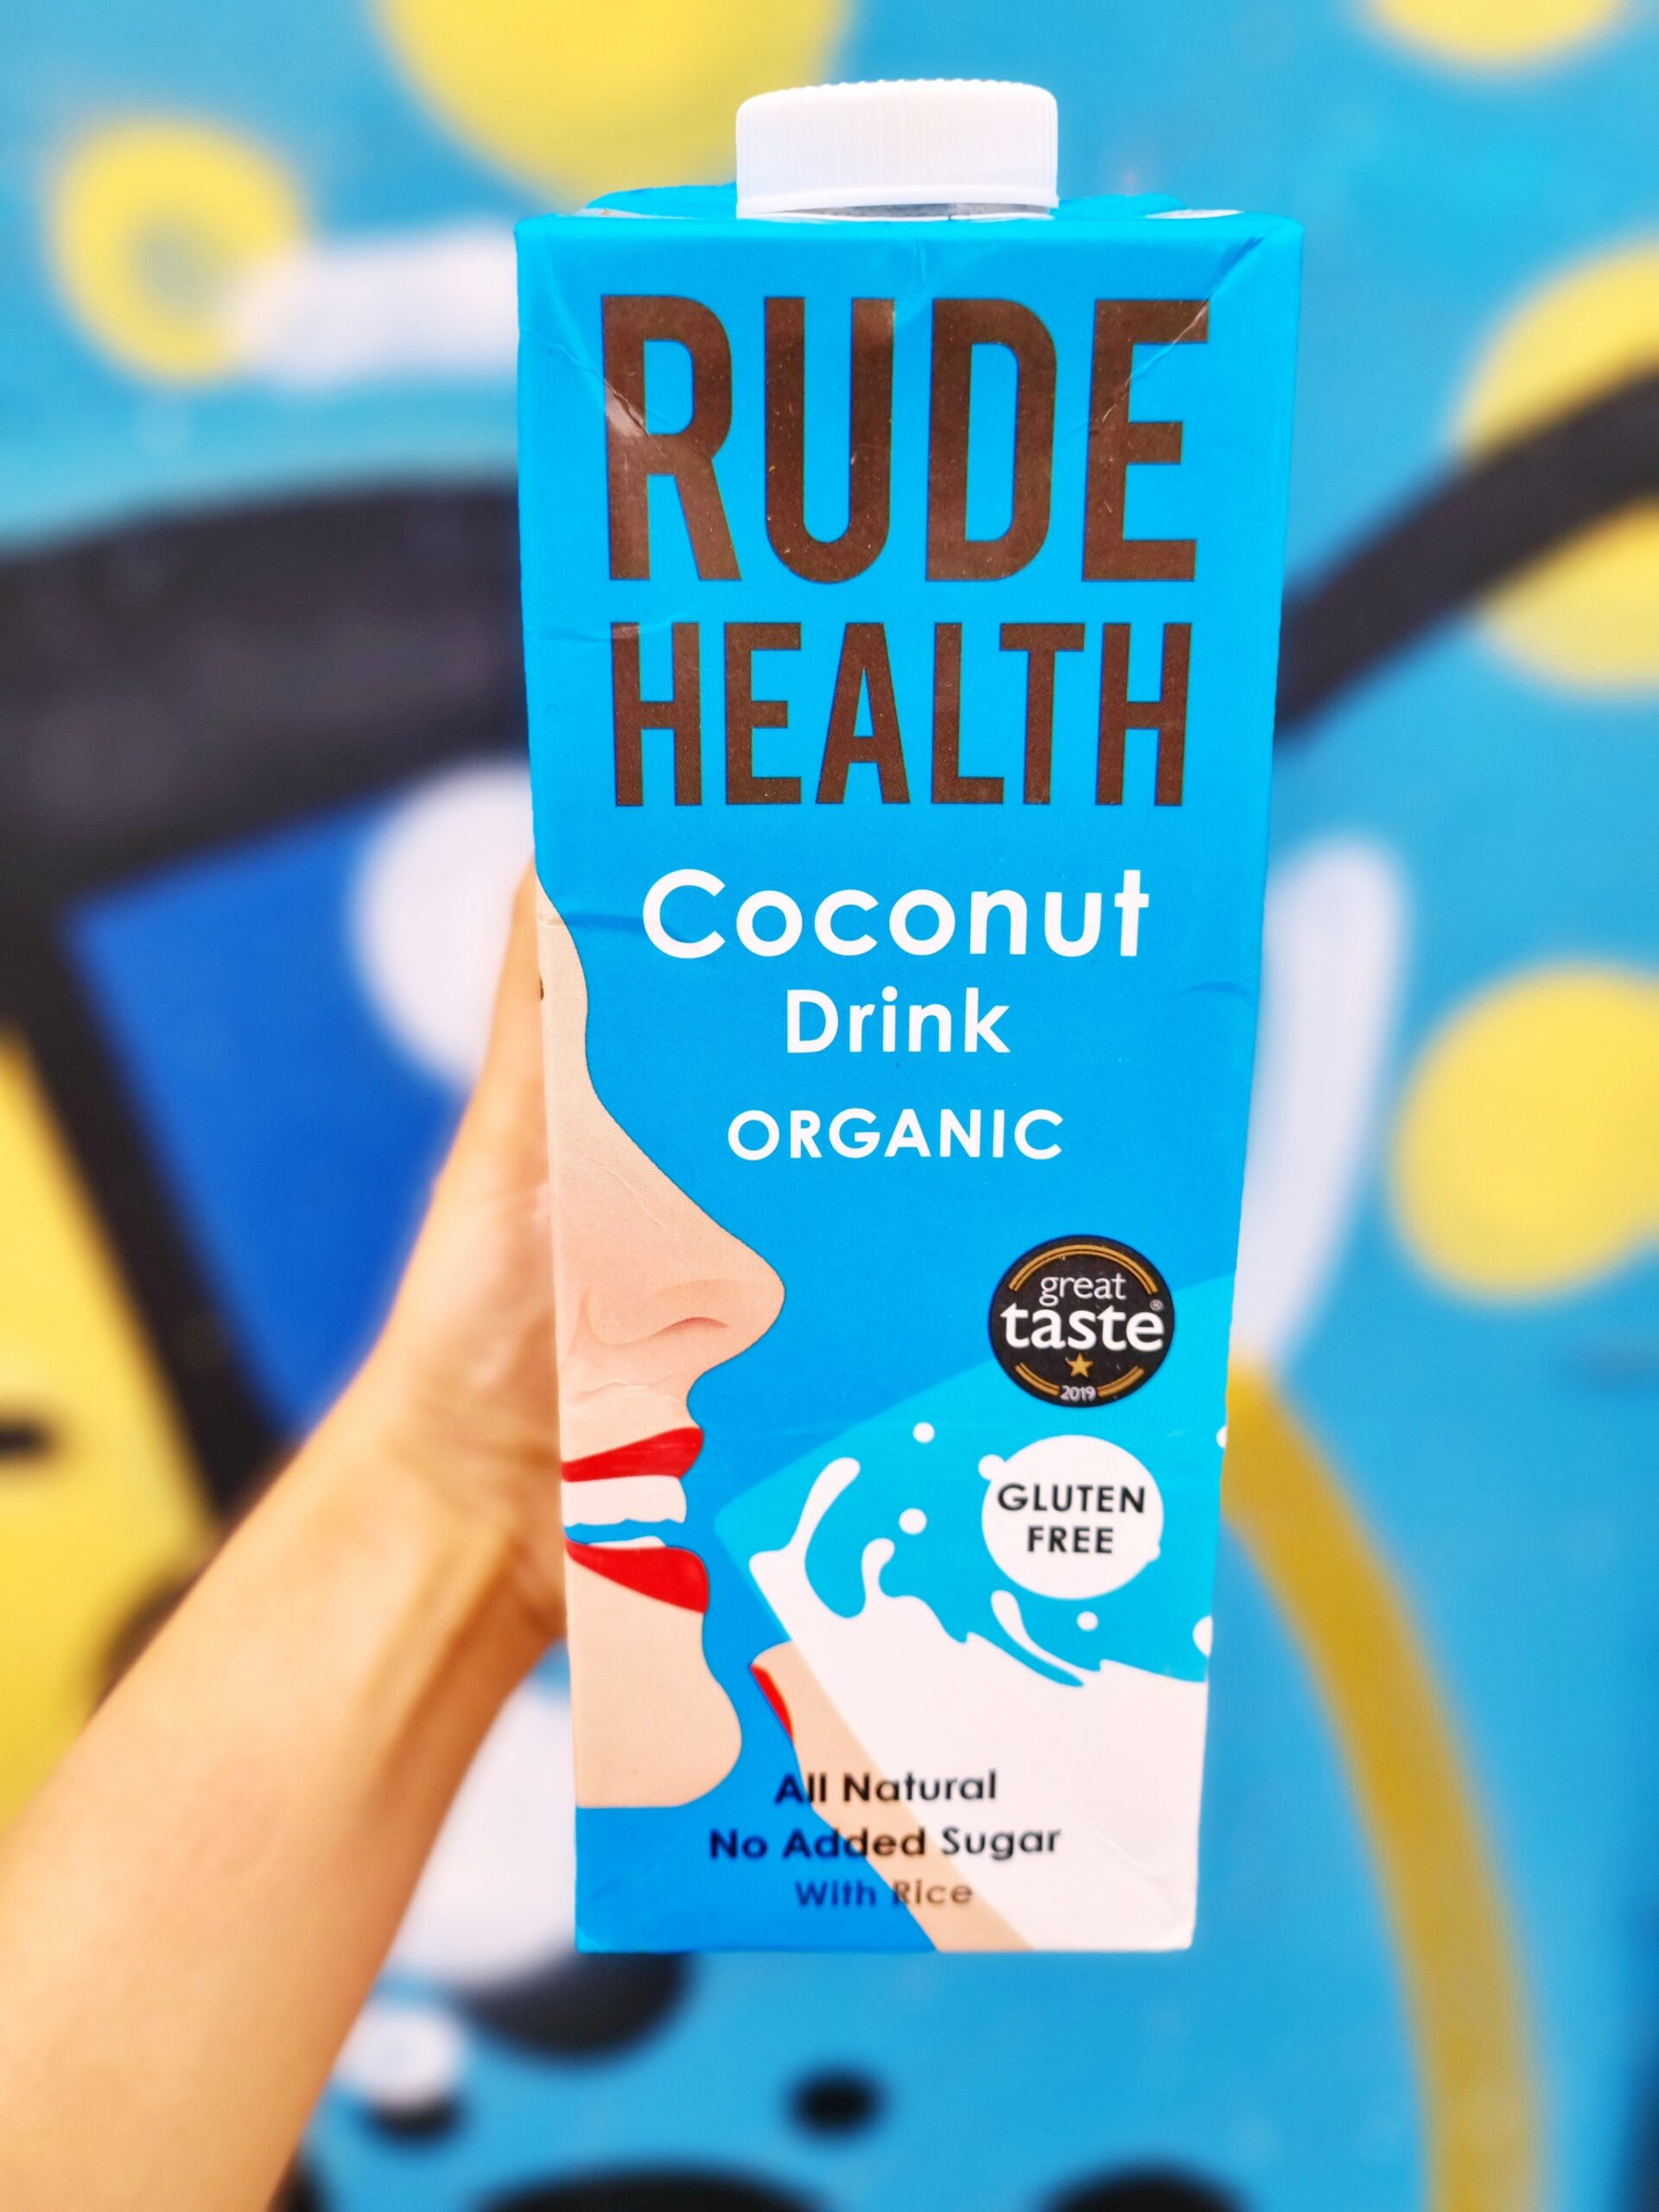 <img src="rude health.jpg" alt="rude health coconut vegan drink"/>